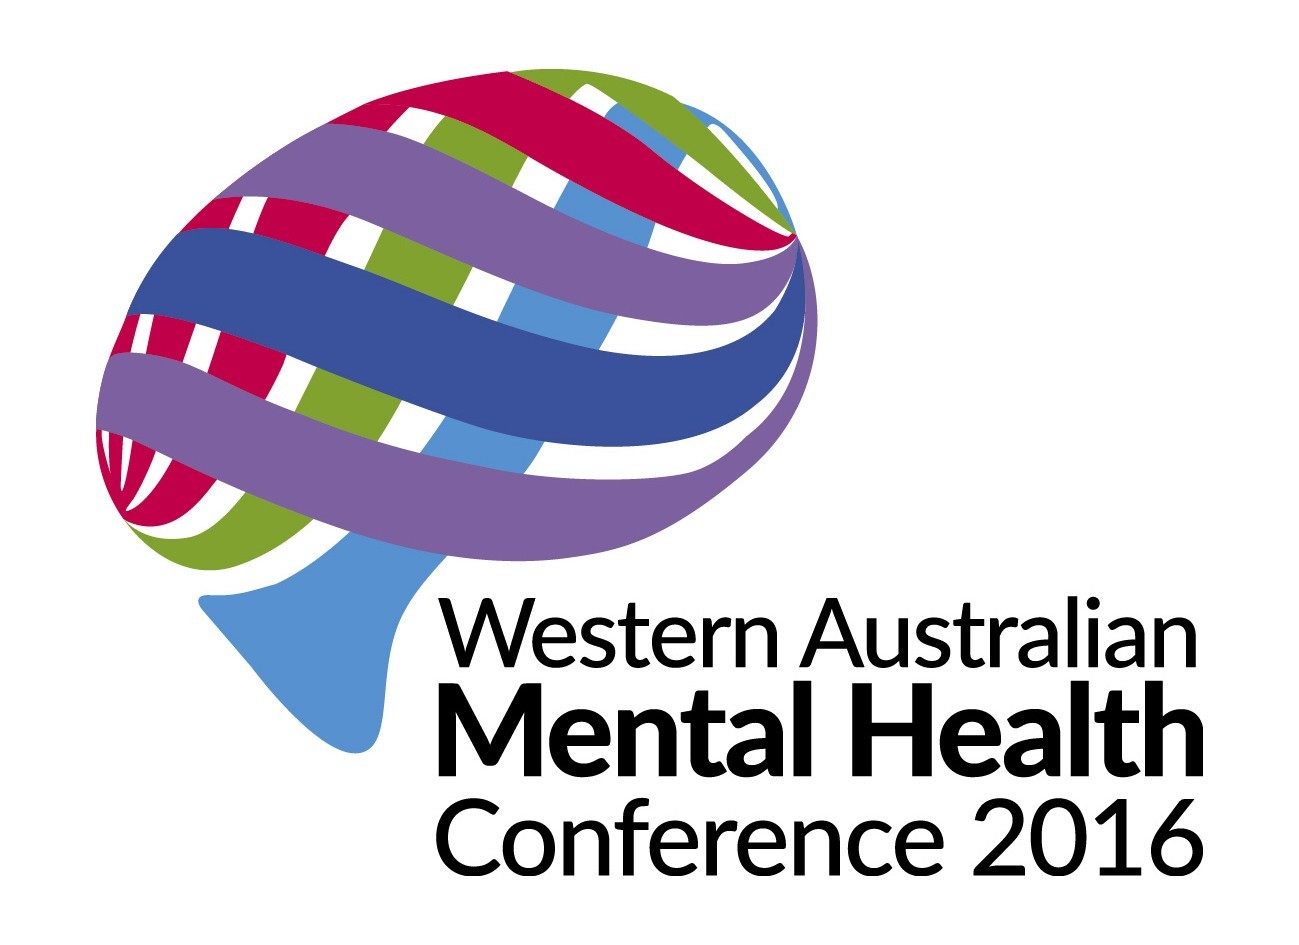 Western Australian Mental Health Conference 2016